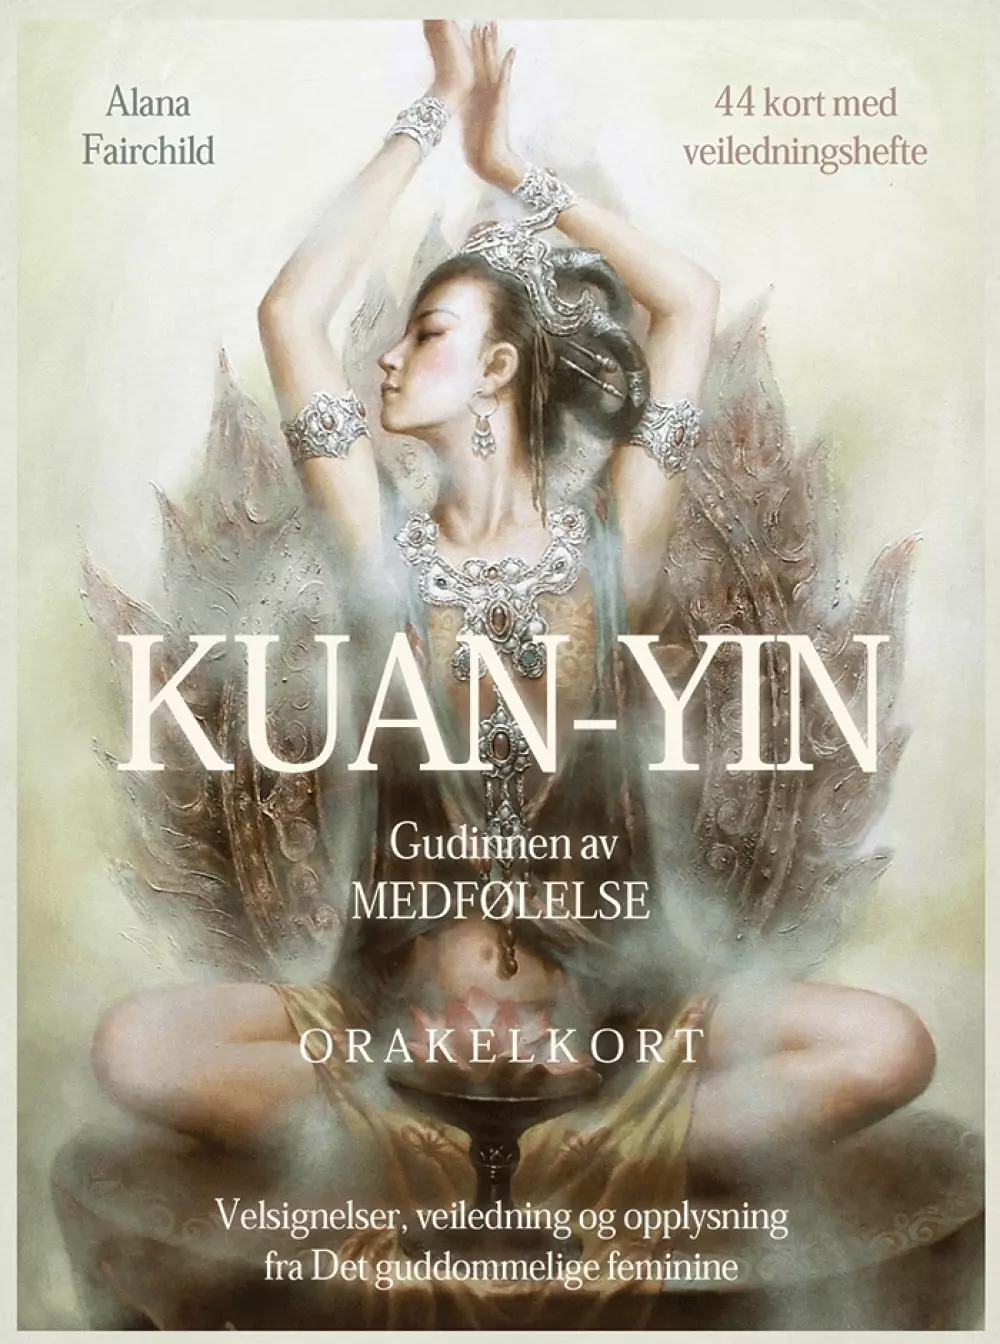 Kuan-Yin orakelkort (Kuan Yin), 9788292455760, 1950035549, Tarot & orakel, Orakelkort